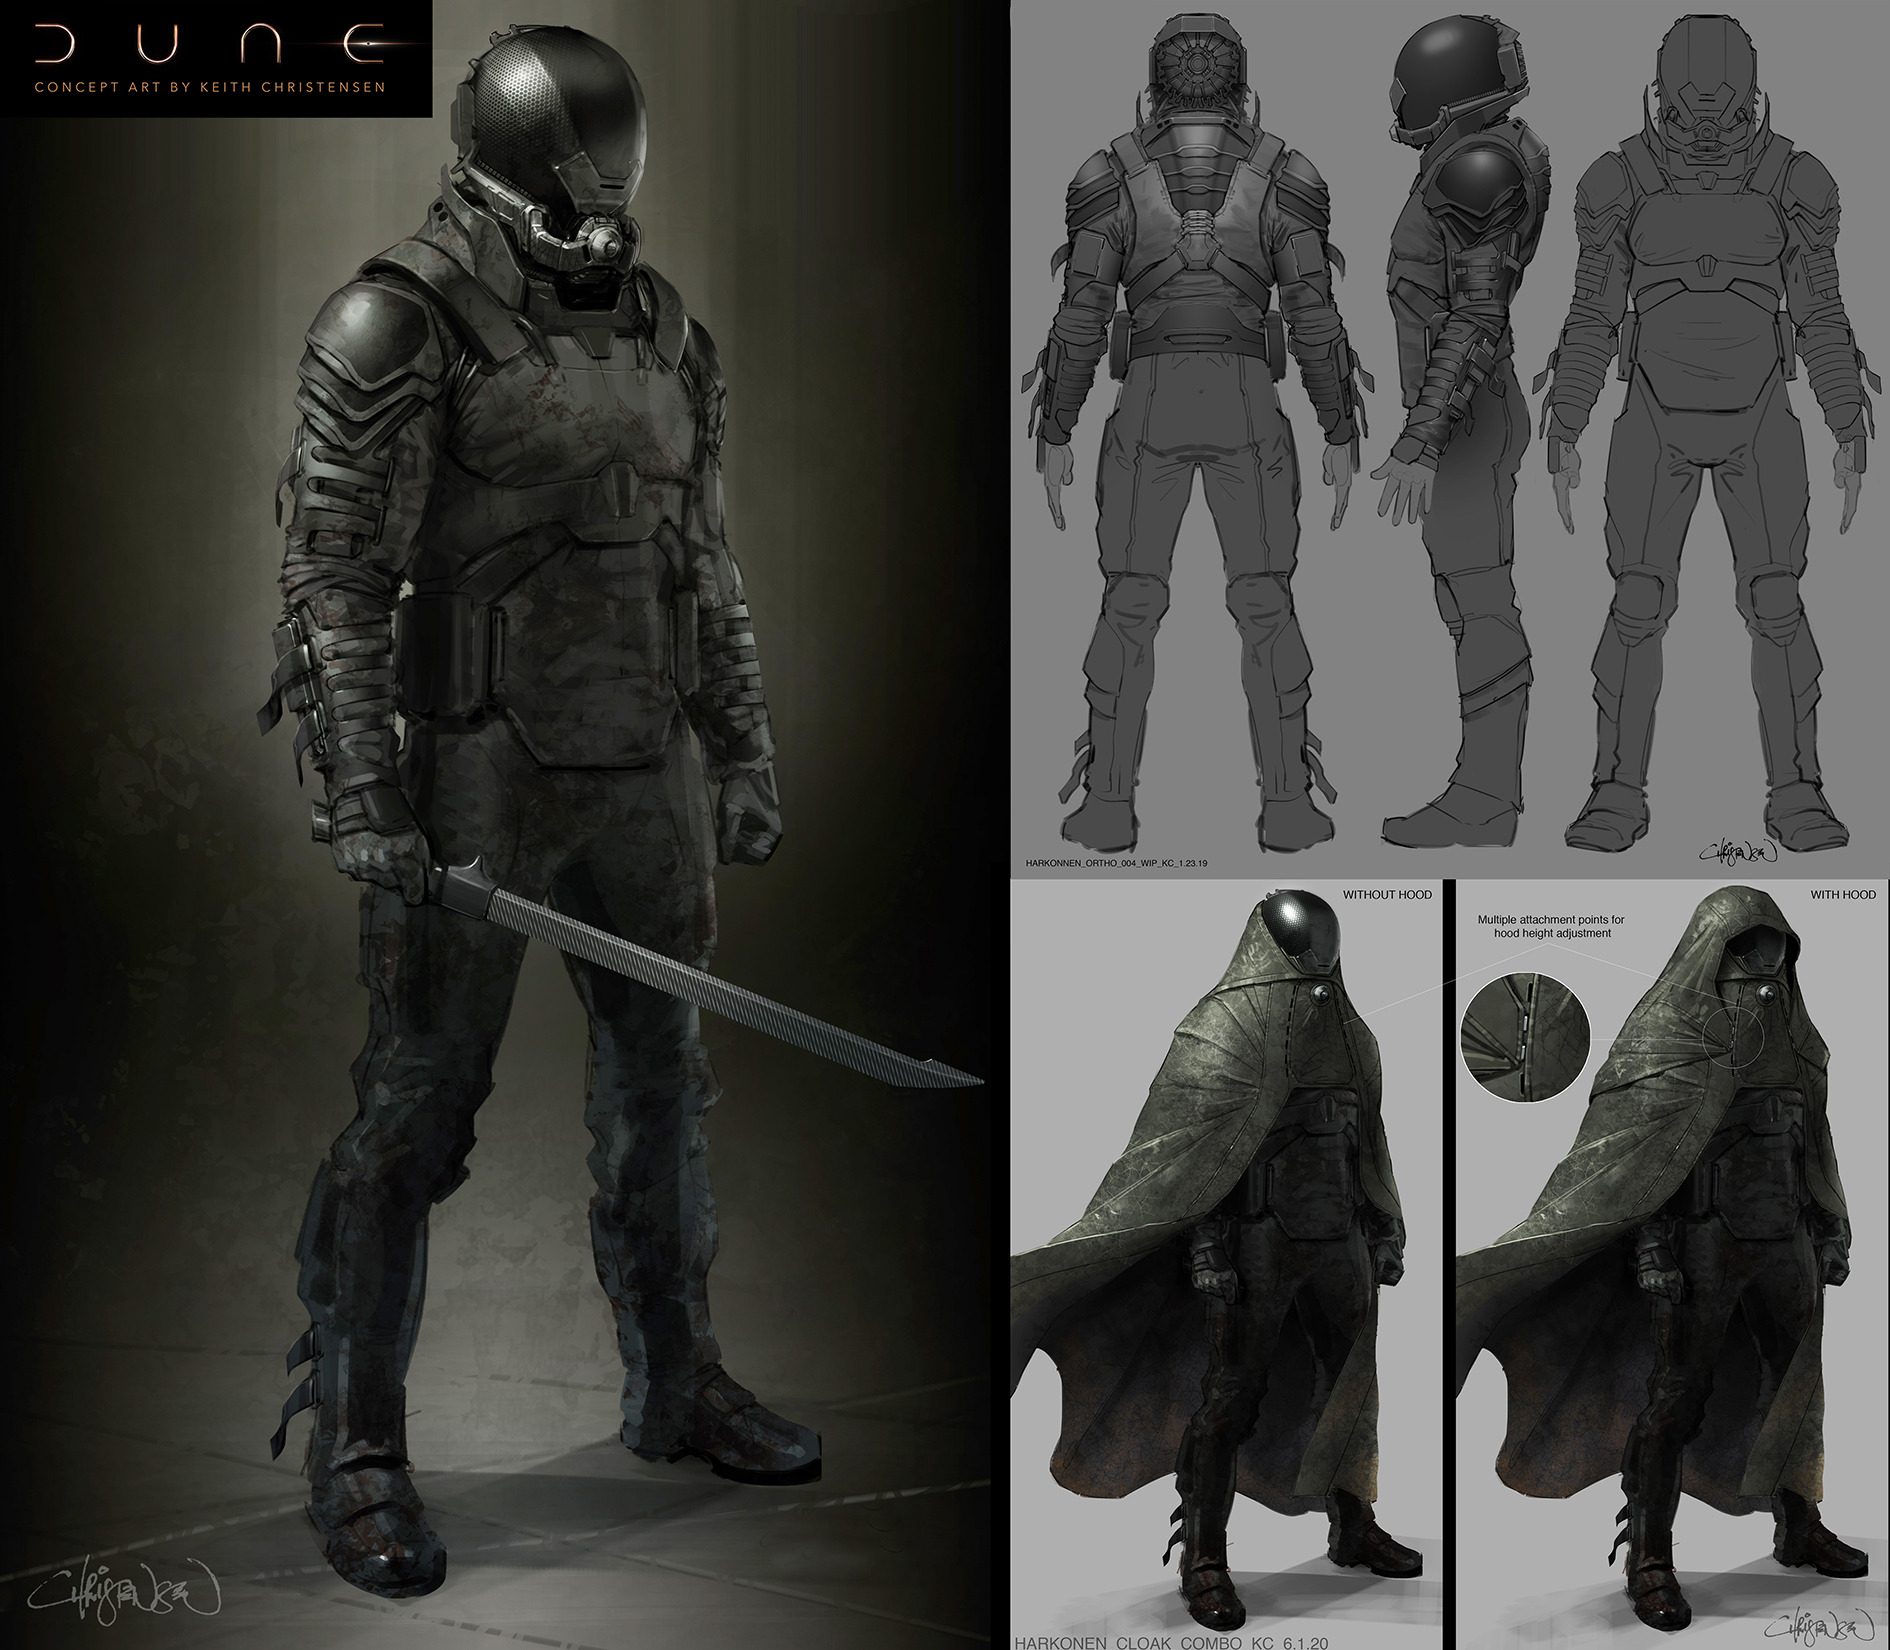 Dune-Part-One-2021-concept-art-Keith-Christensen-Harkonnen-armor-03-1890x1650.jpg